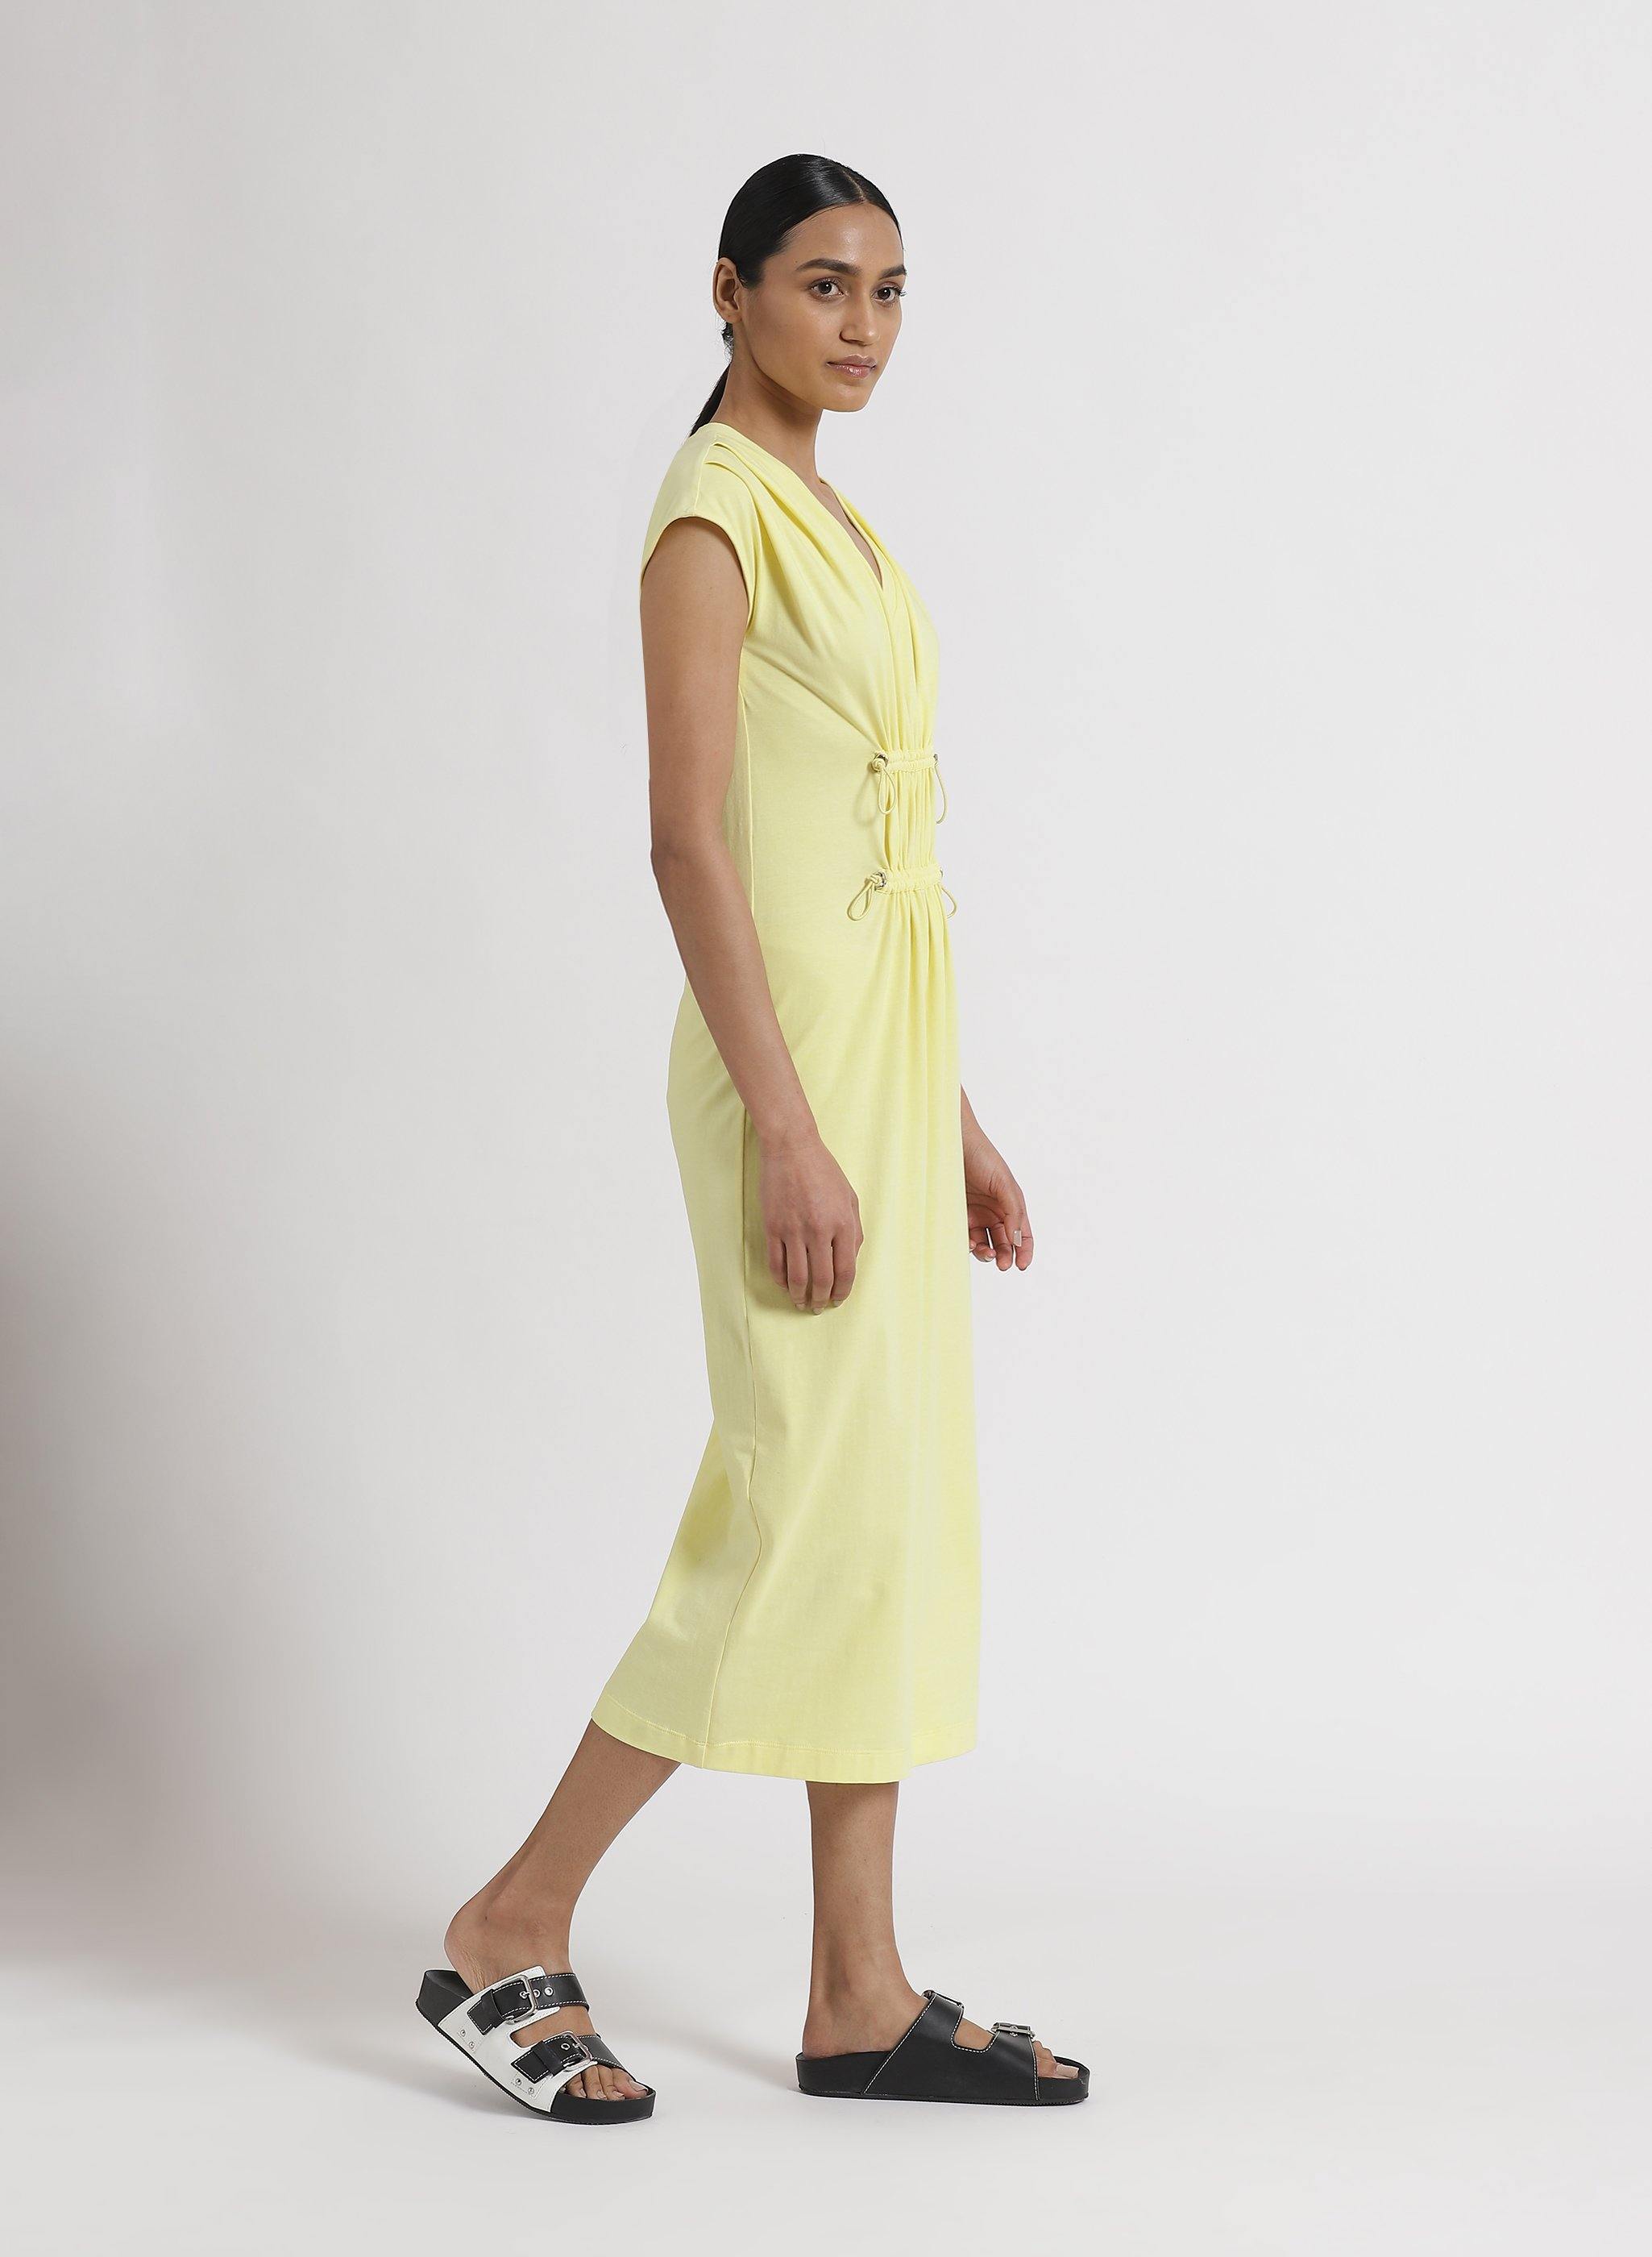 Amanita Dress- Genes online store 2020